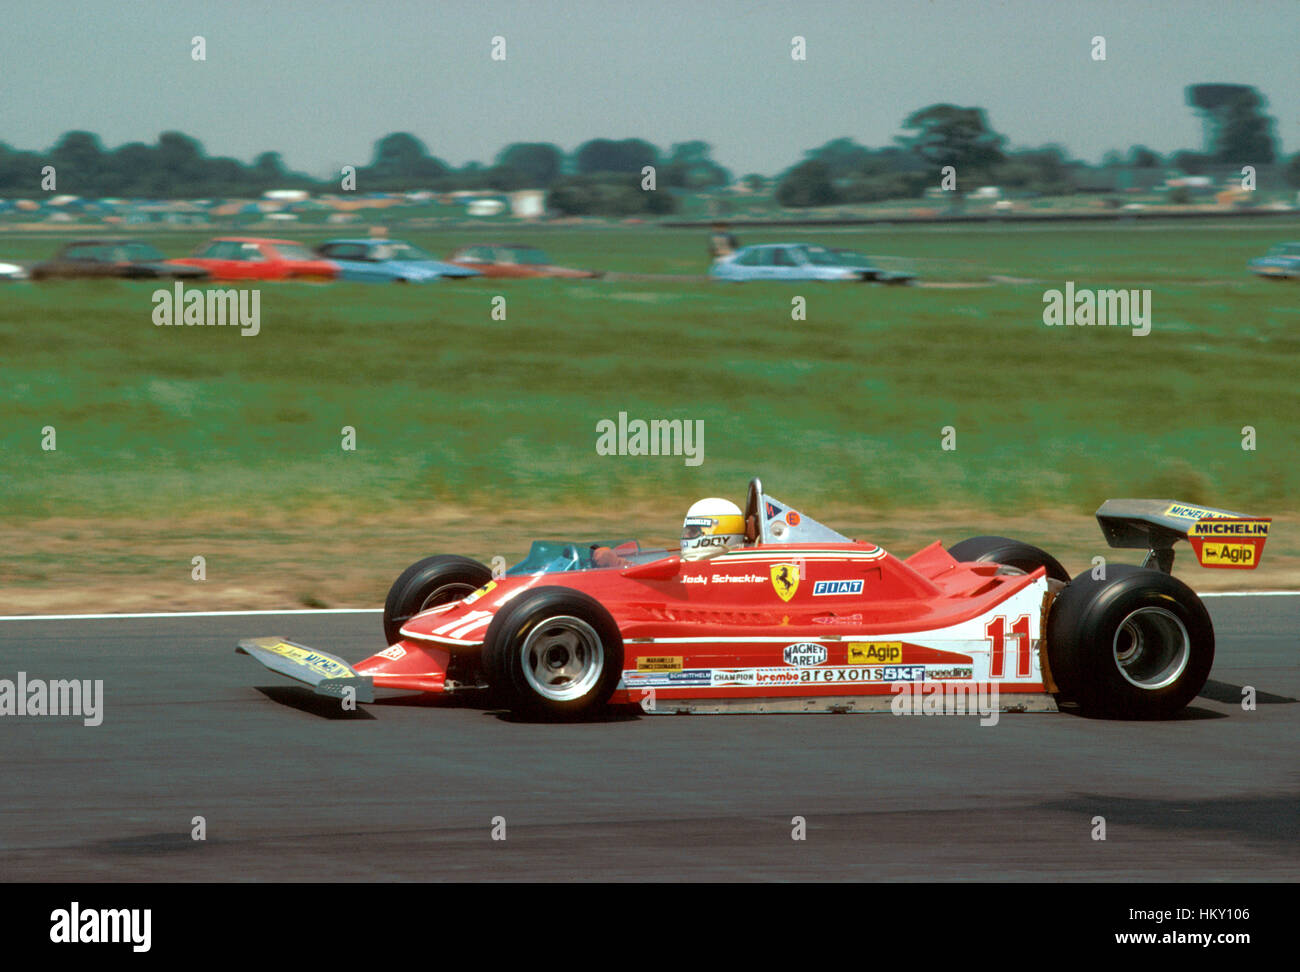 1979 Jody Scheckter South African Ferrari 312T4 Silverstone British GP 5th GG Stock Photo